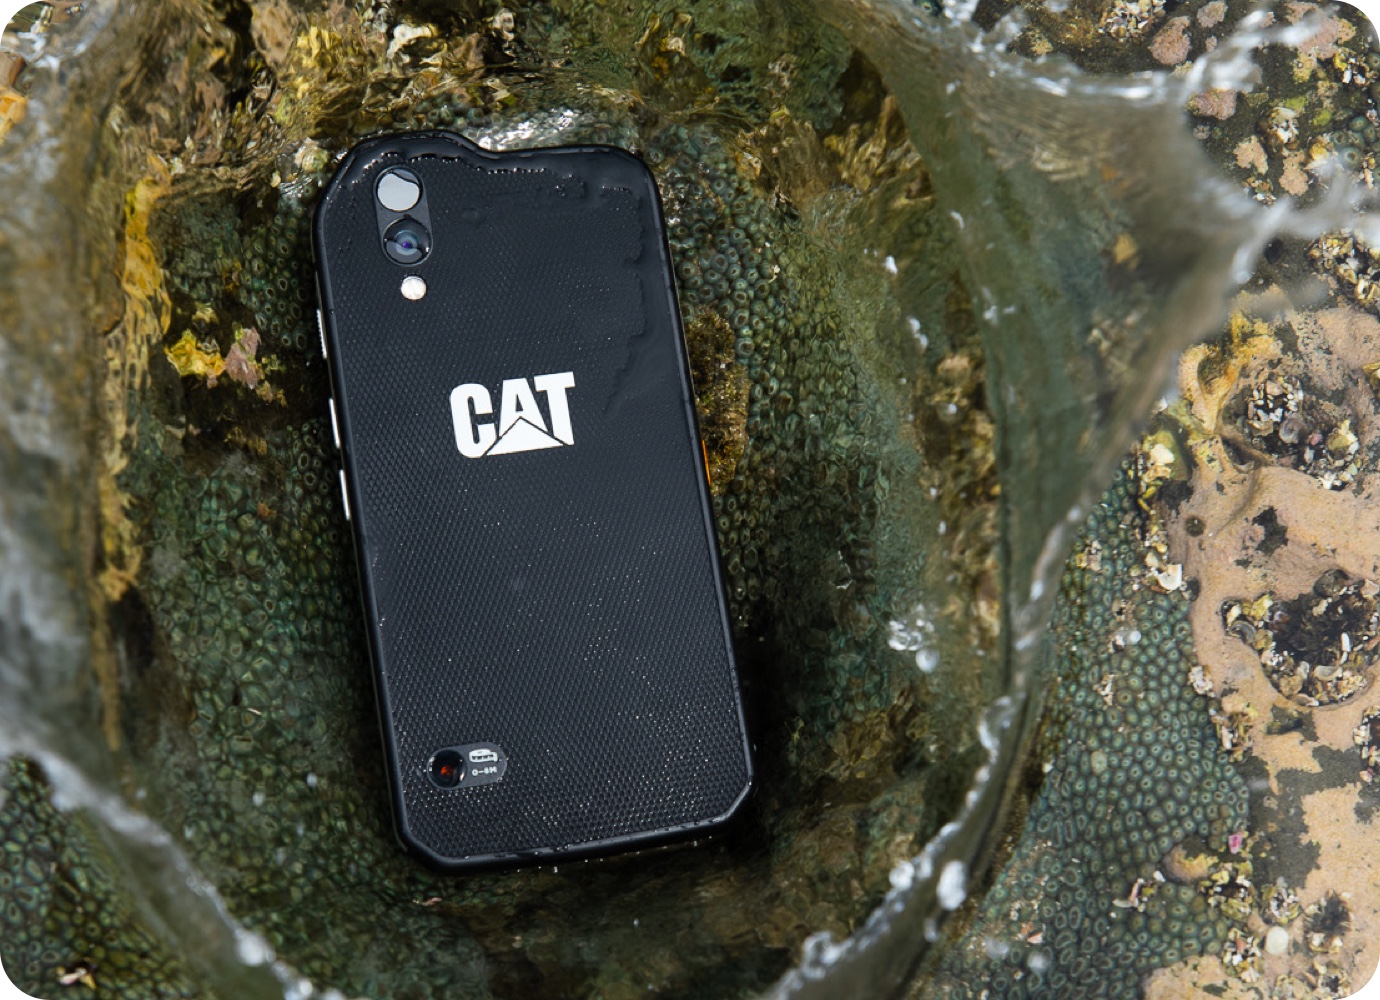 CAT PHONE S S61 Smartphone resistente impermeable con cámara FLIR integrada